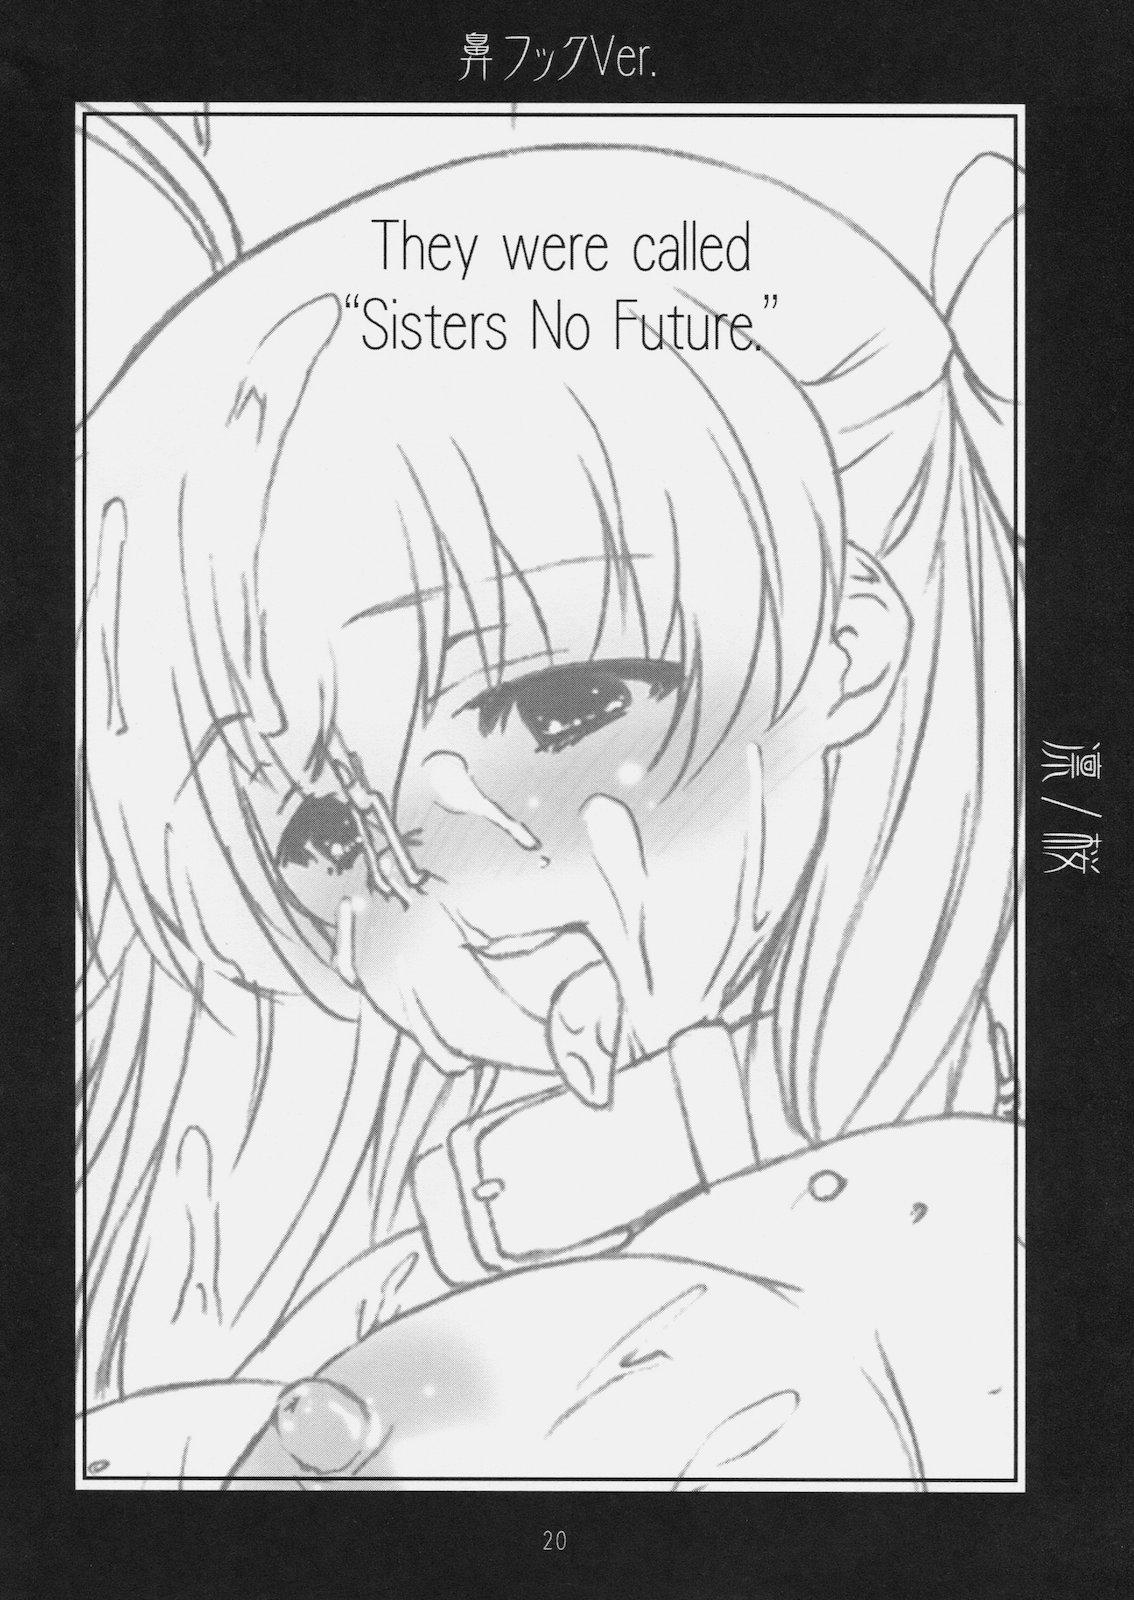 Sister No Future. Rin/Sakura 18